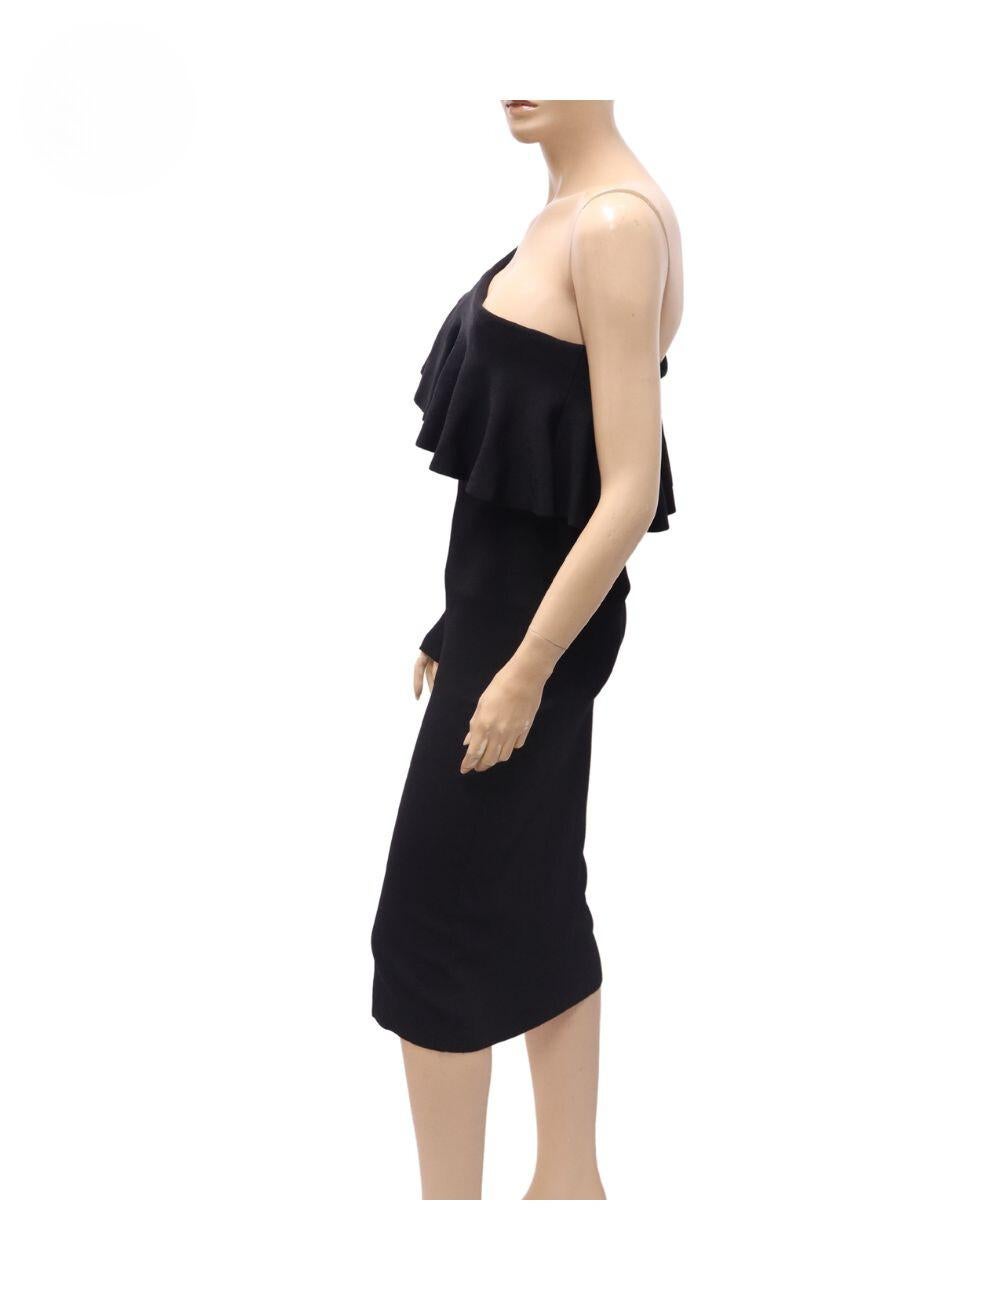 Pinko Women's Asymmetrical Ruffle Trim Dress Size L In Excellent Condition For Sale In Amman, JO